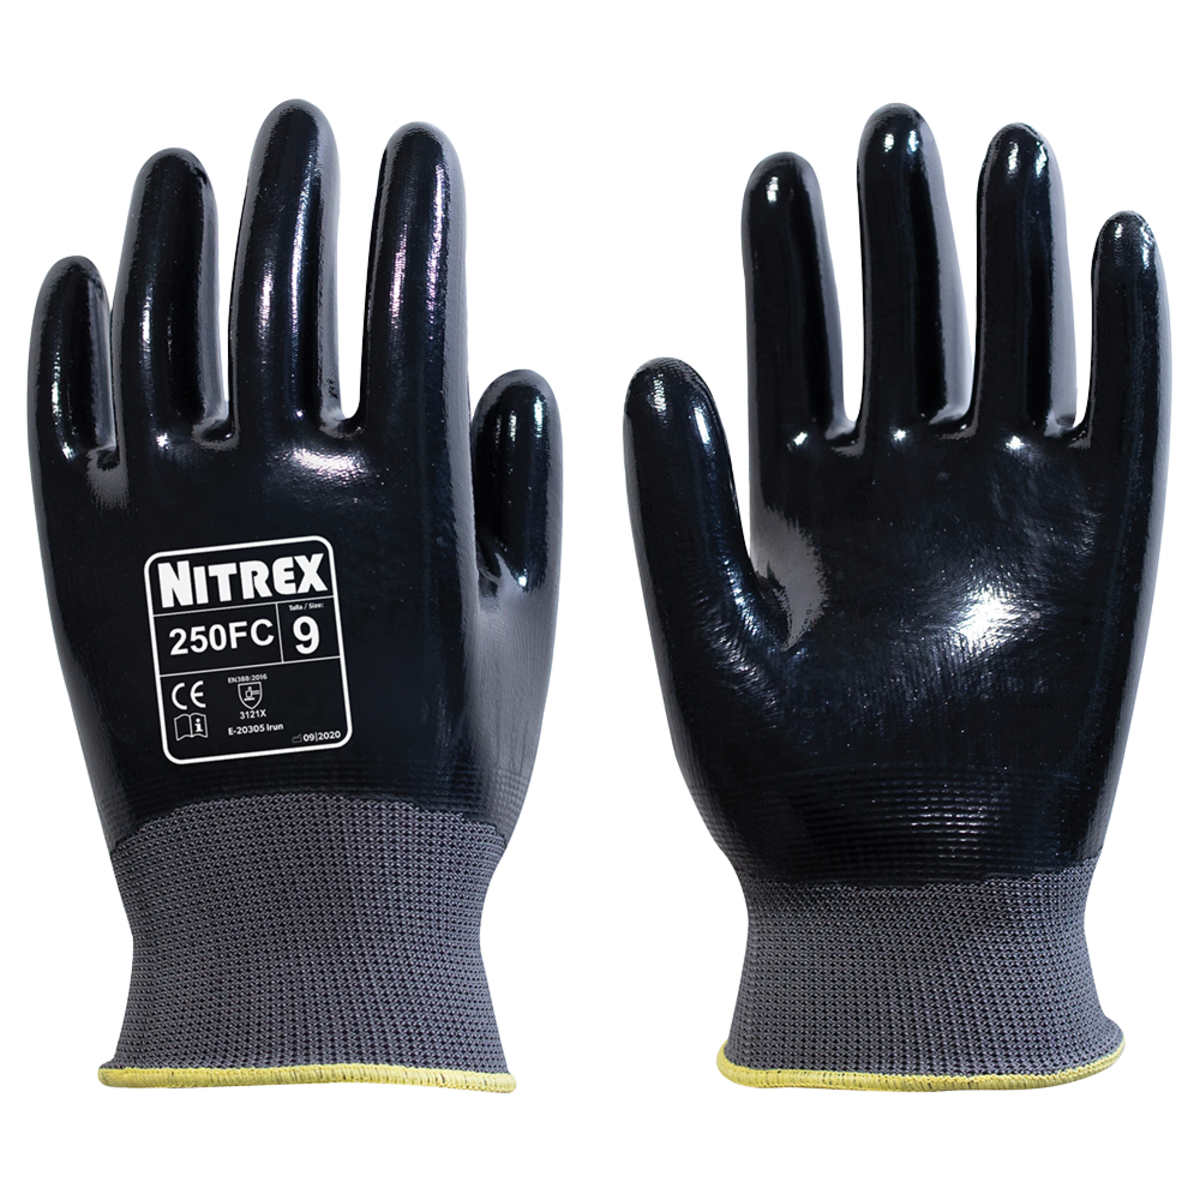 Nitrex 250FC (10 pairs)